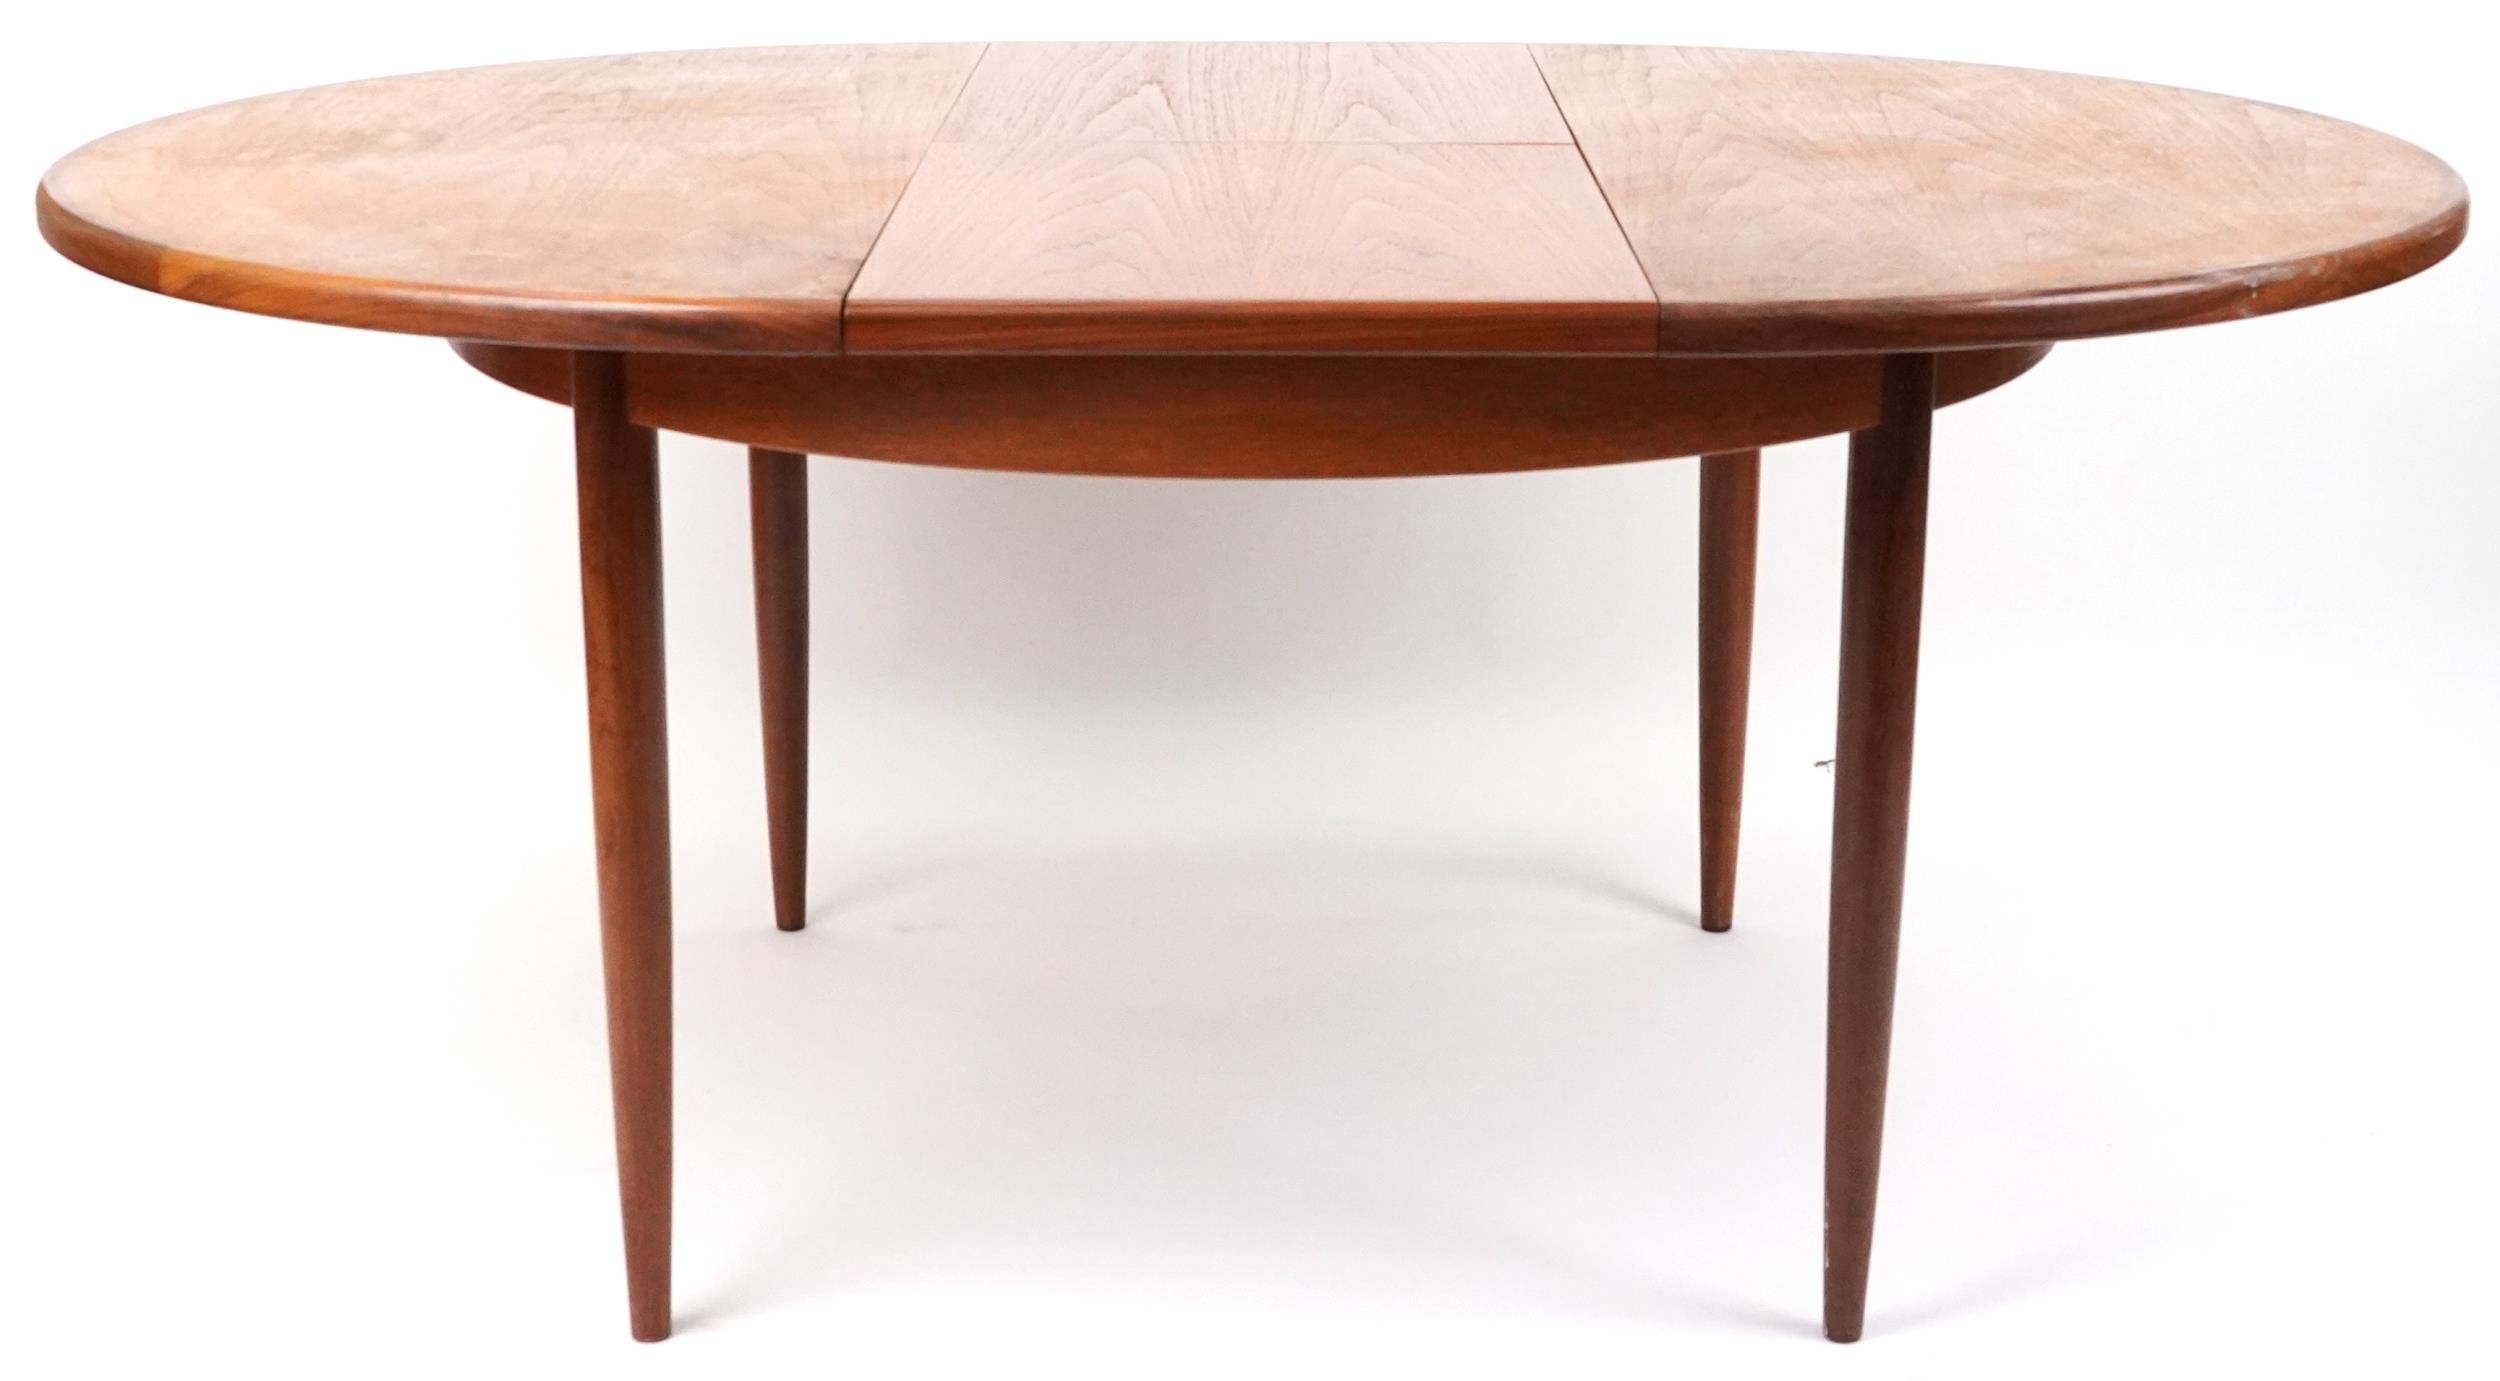 G Plan, mid century teak Fresco extending dining table, 73cm high x 121cm in diameter when closed - Image 3 of 5